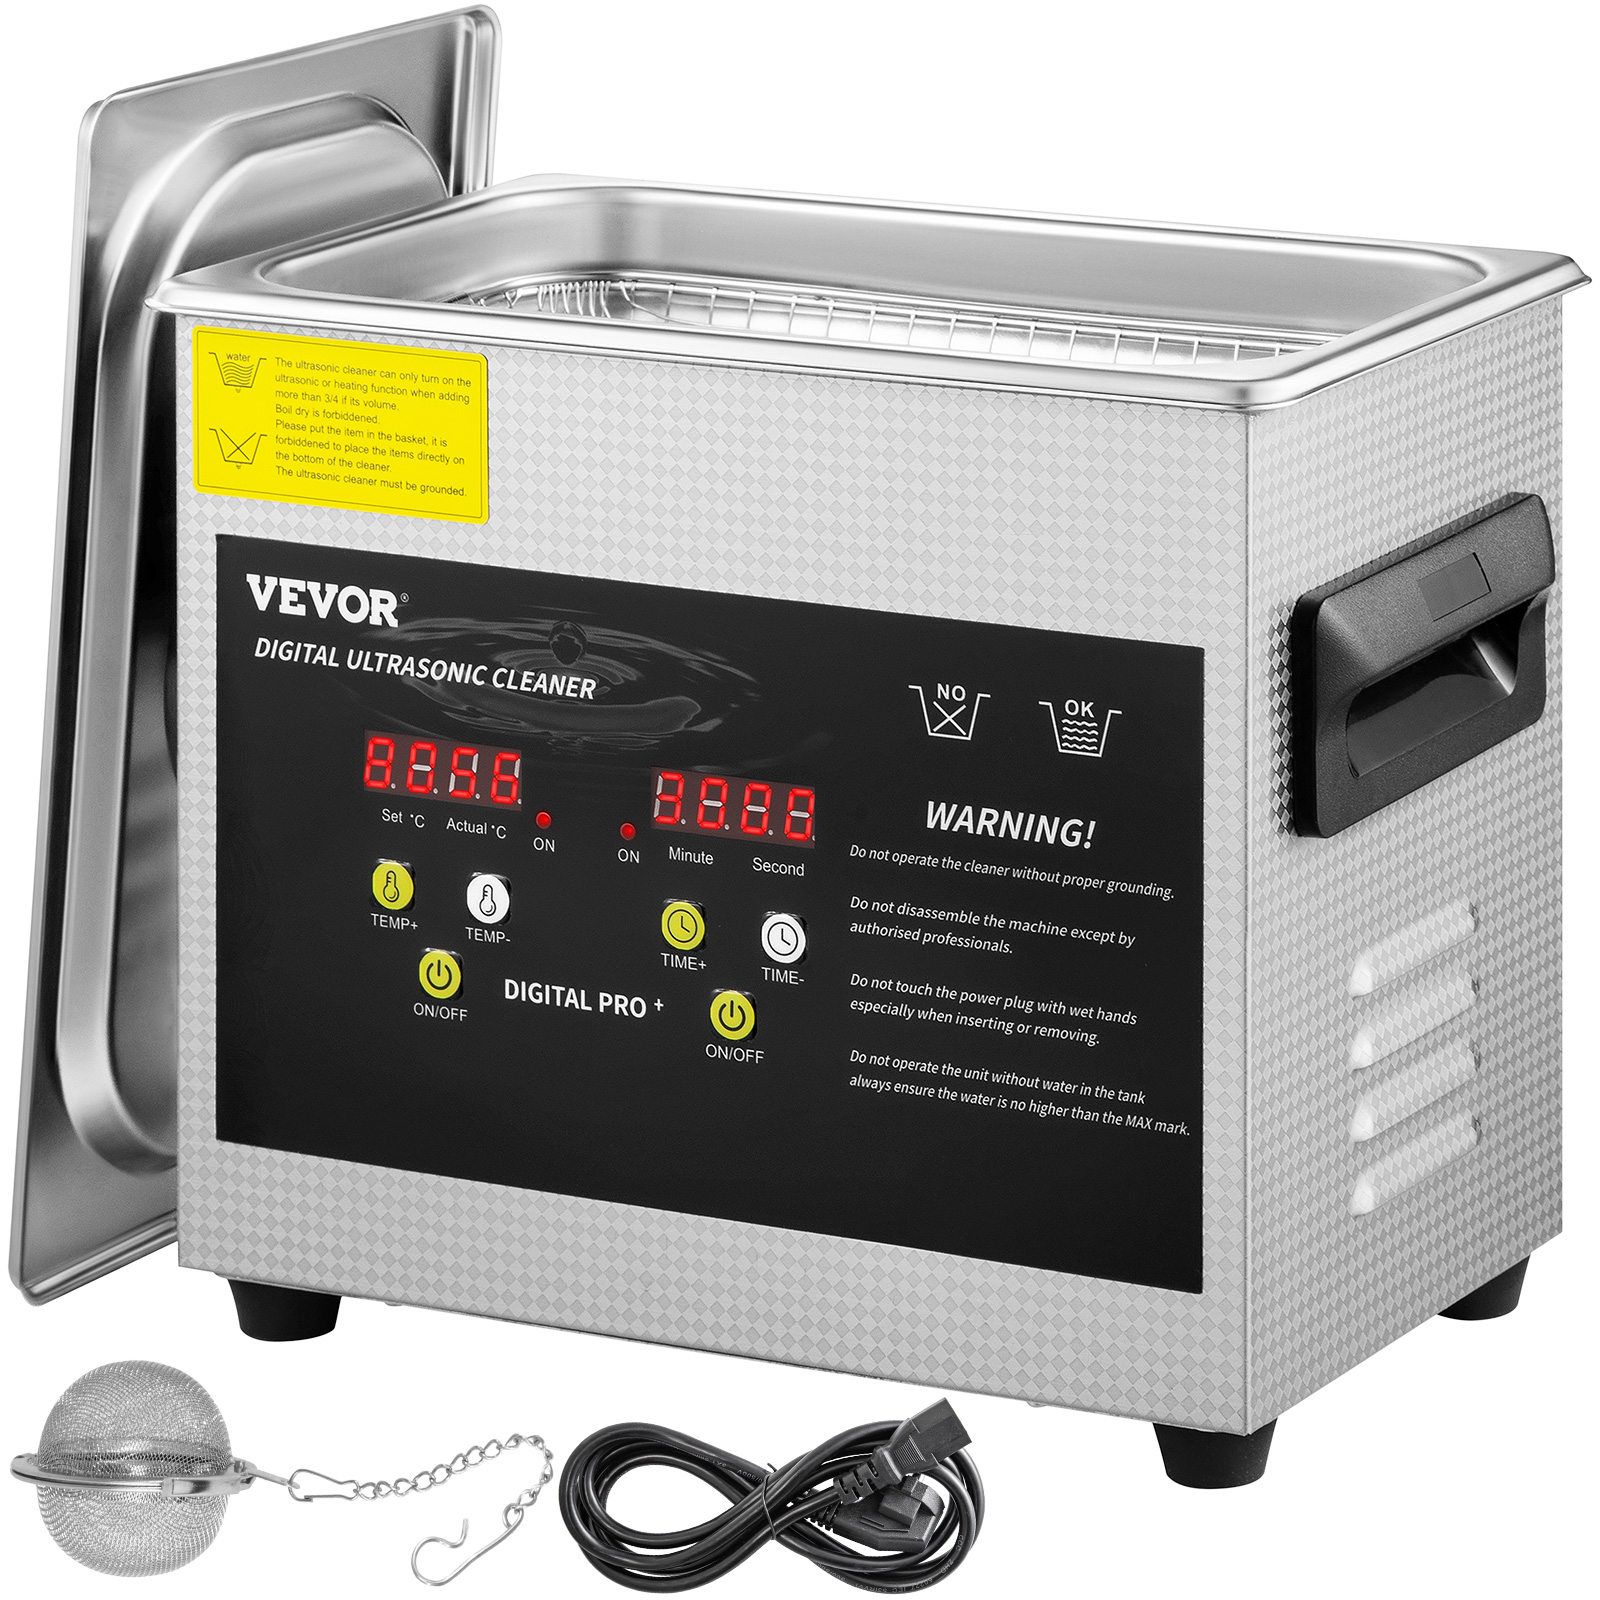 Vevor DZ-260C Digital Chamber Vacuum Sealer Exceeds My